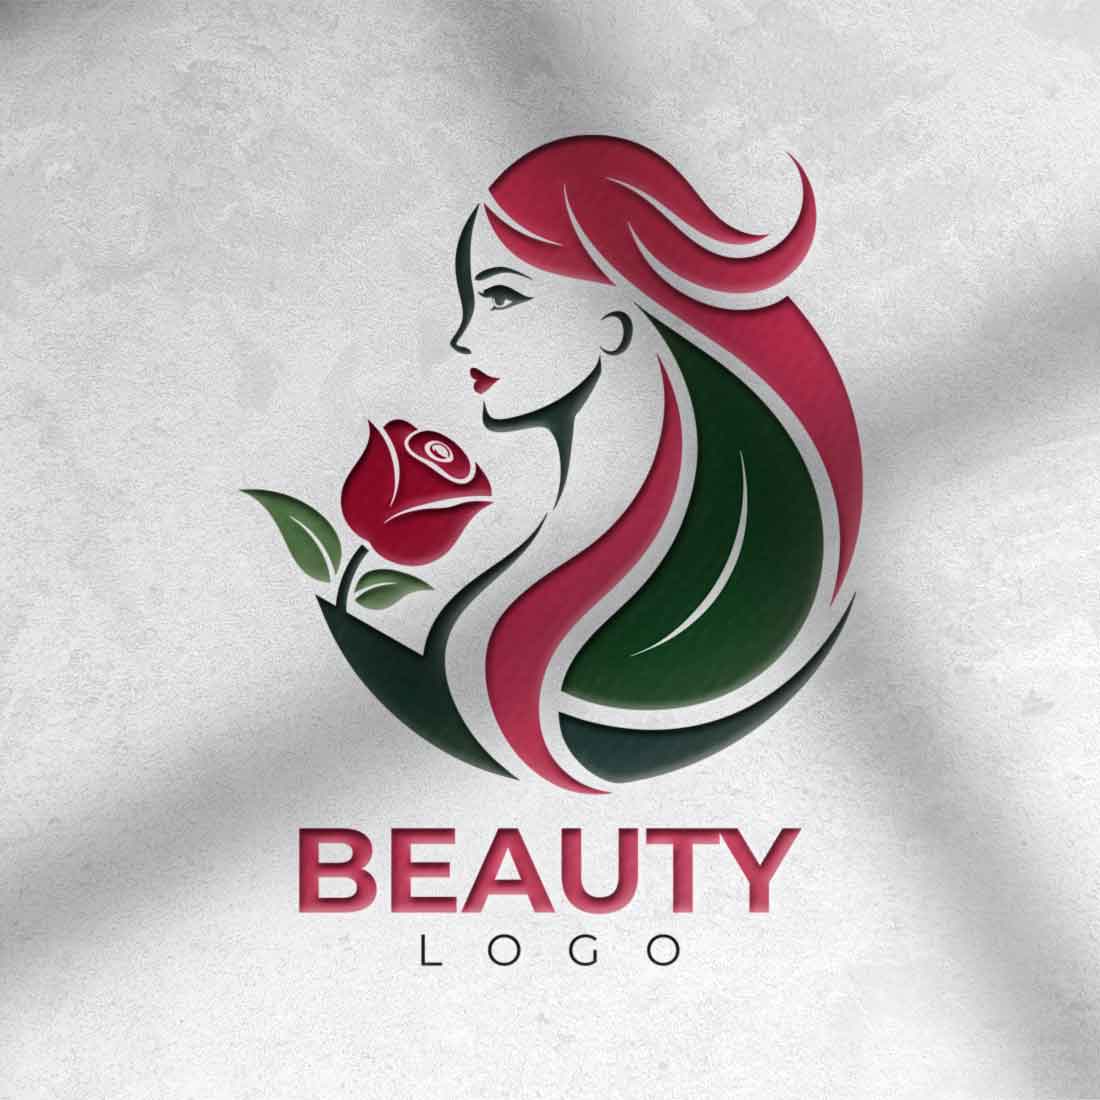 Elegant Beauty Logo preview image.